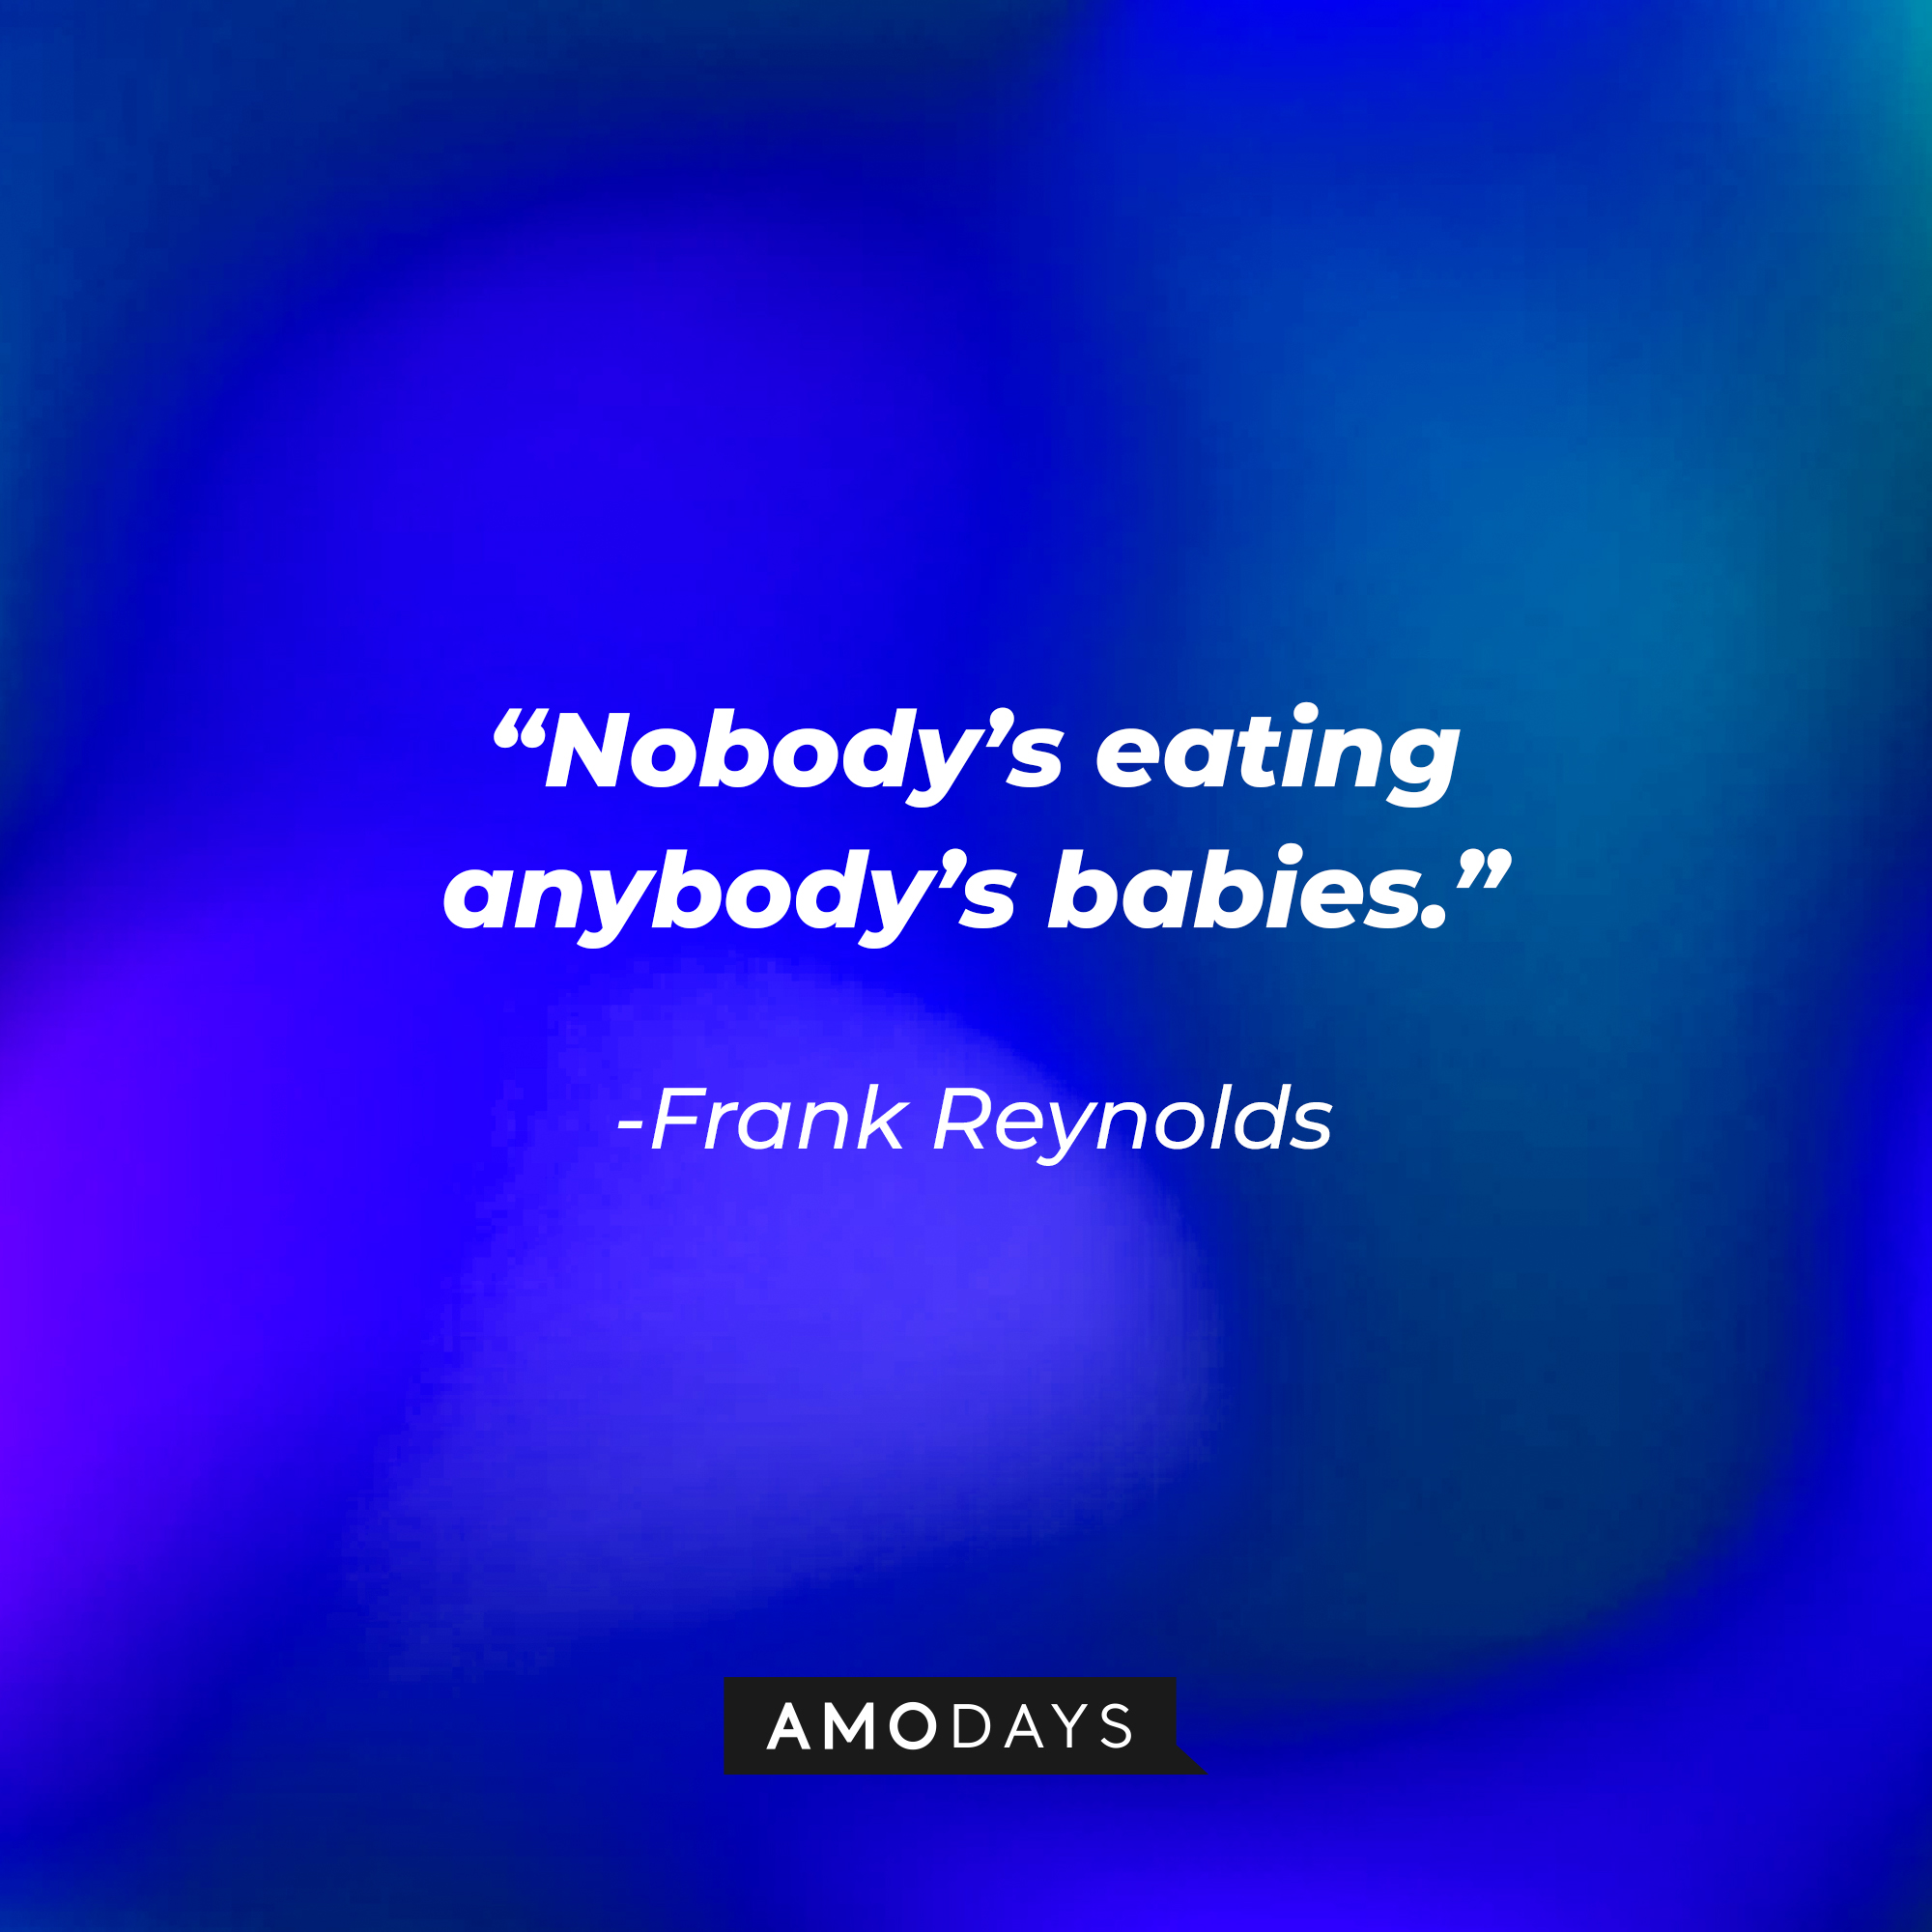 Frank Reynolds quote: “Nobody’s eating anybody’s babies.” | Source: facebook.com/alwayssunny